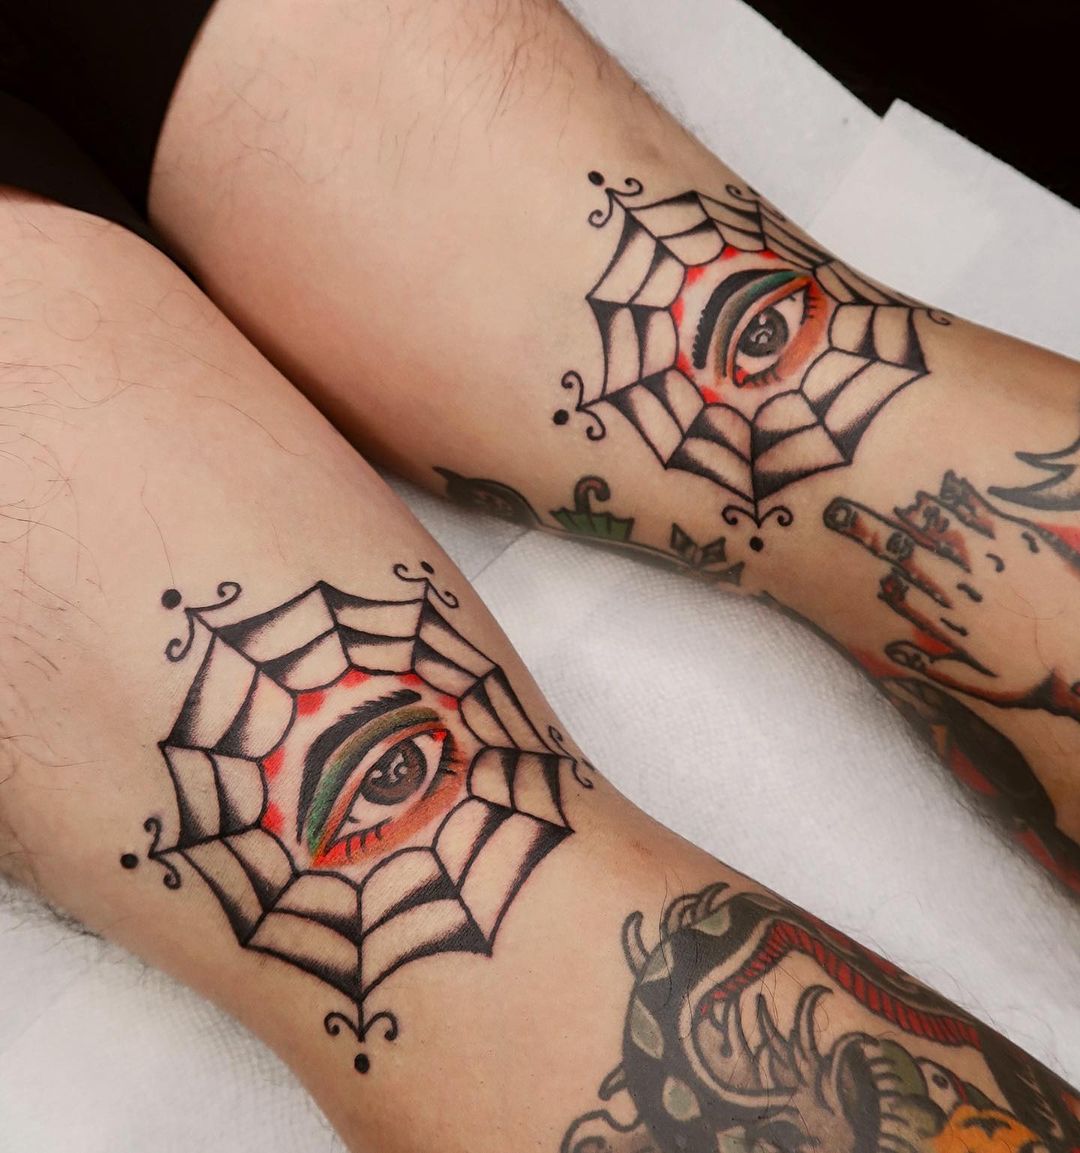 My Skull Spiderweb Knee tattoo by patchworksteve on DeviantArt